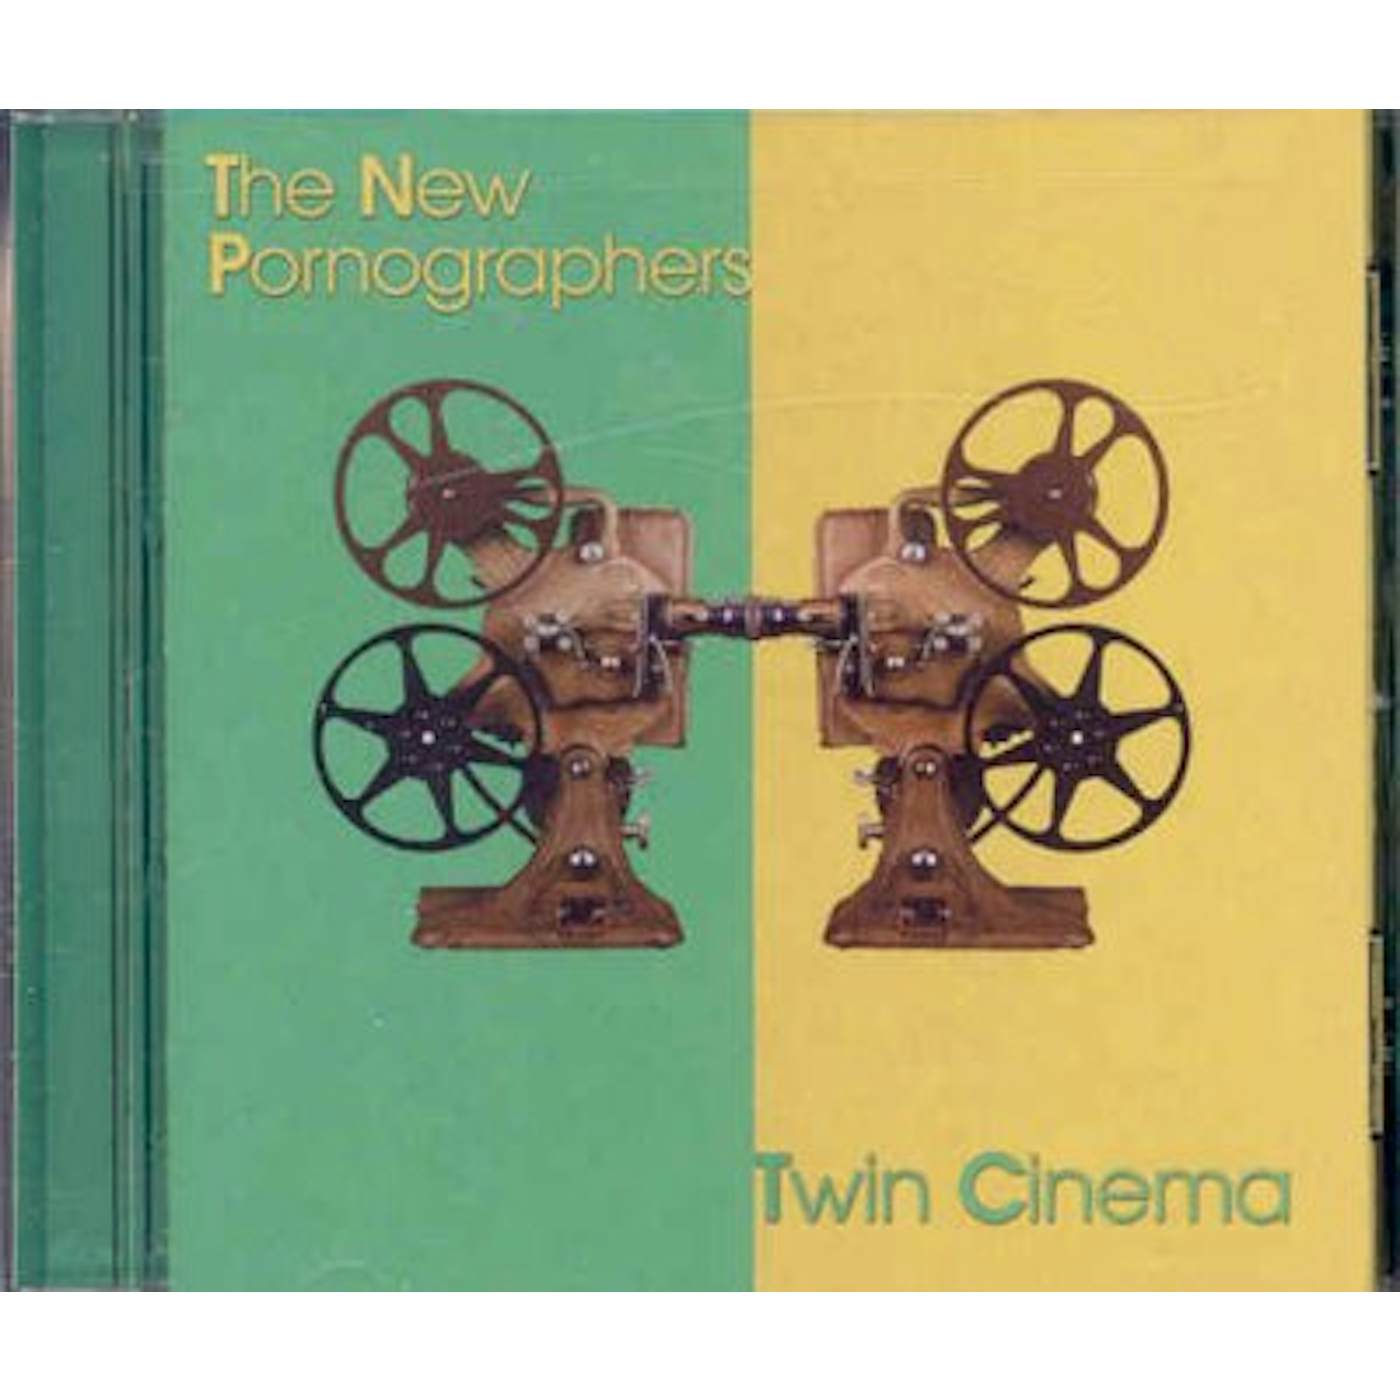 The New Pornographers TWIN CINEMA CD